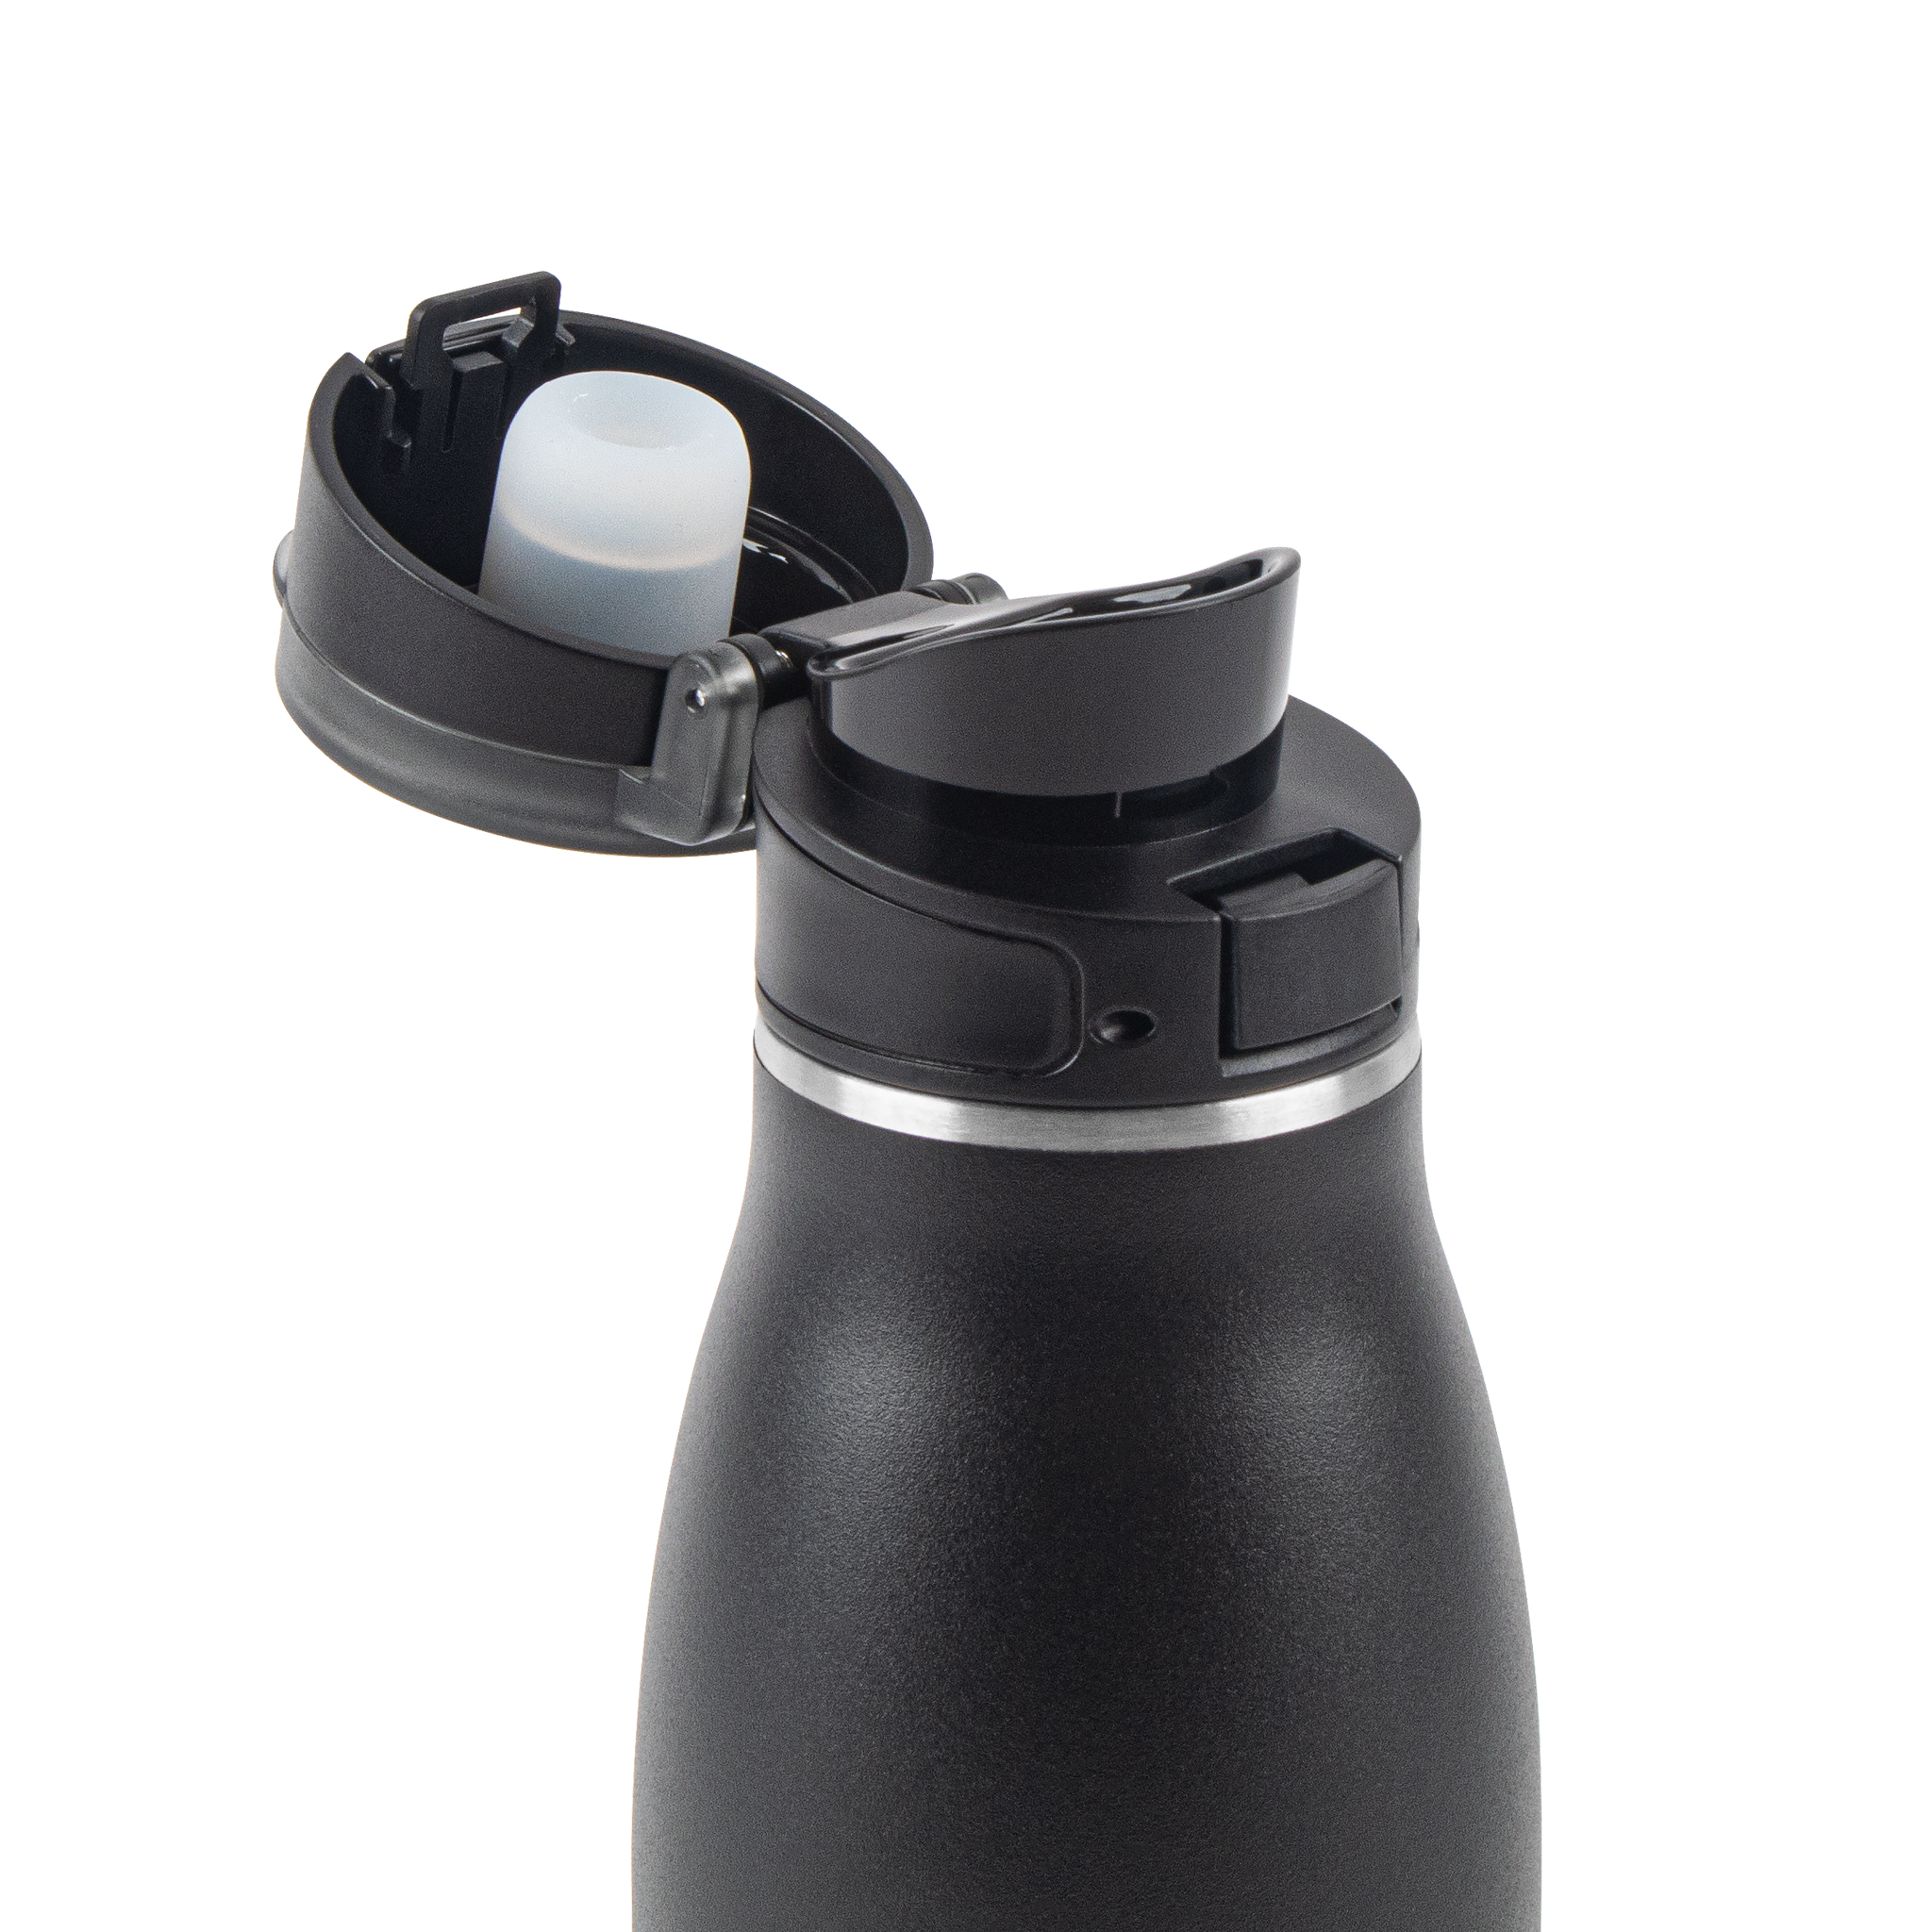 Takeya Traveler Insulated Coffee Mug with Leak Proof Lid, BPA Free